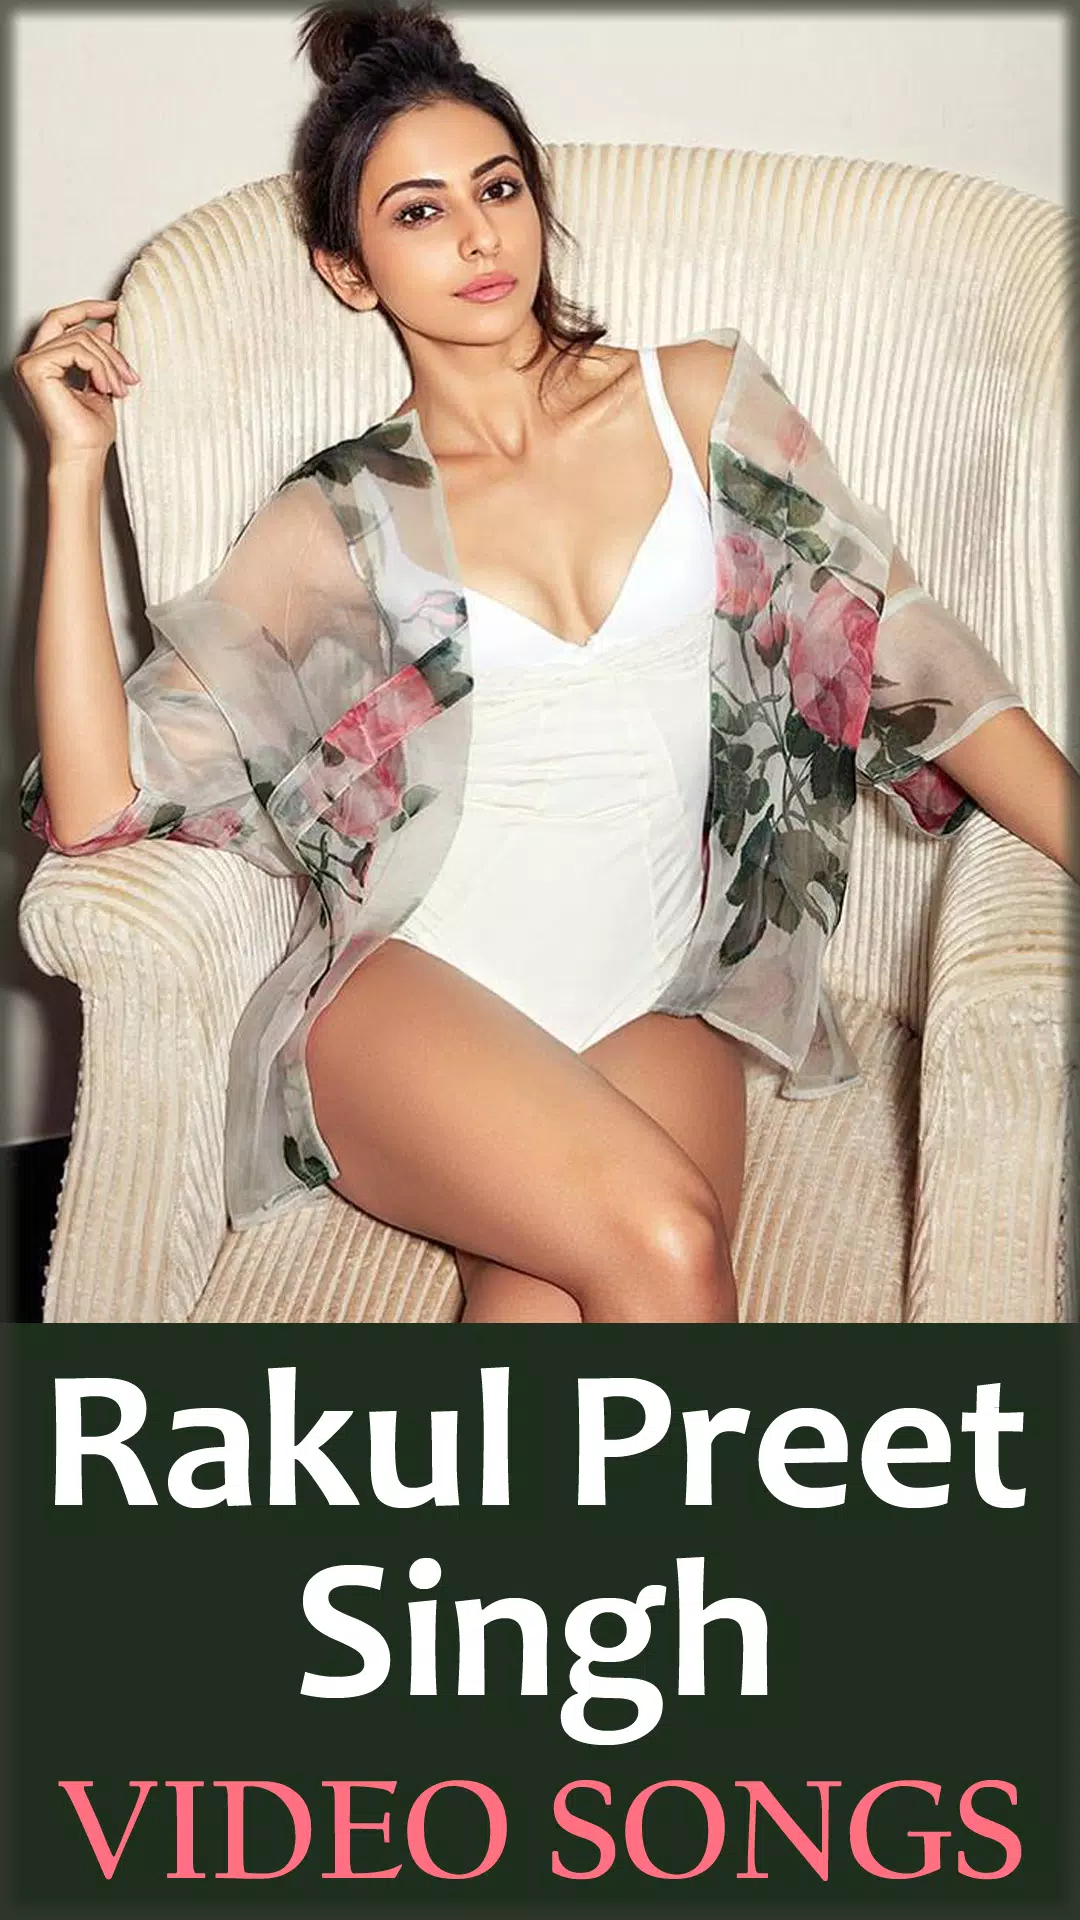 Rakul Preeti Sex Videos - Rakul Preet Singh Hot Hd Video Songs App APK pour Android TÃ©lÃ©charger